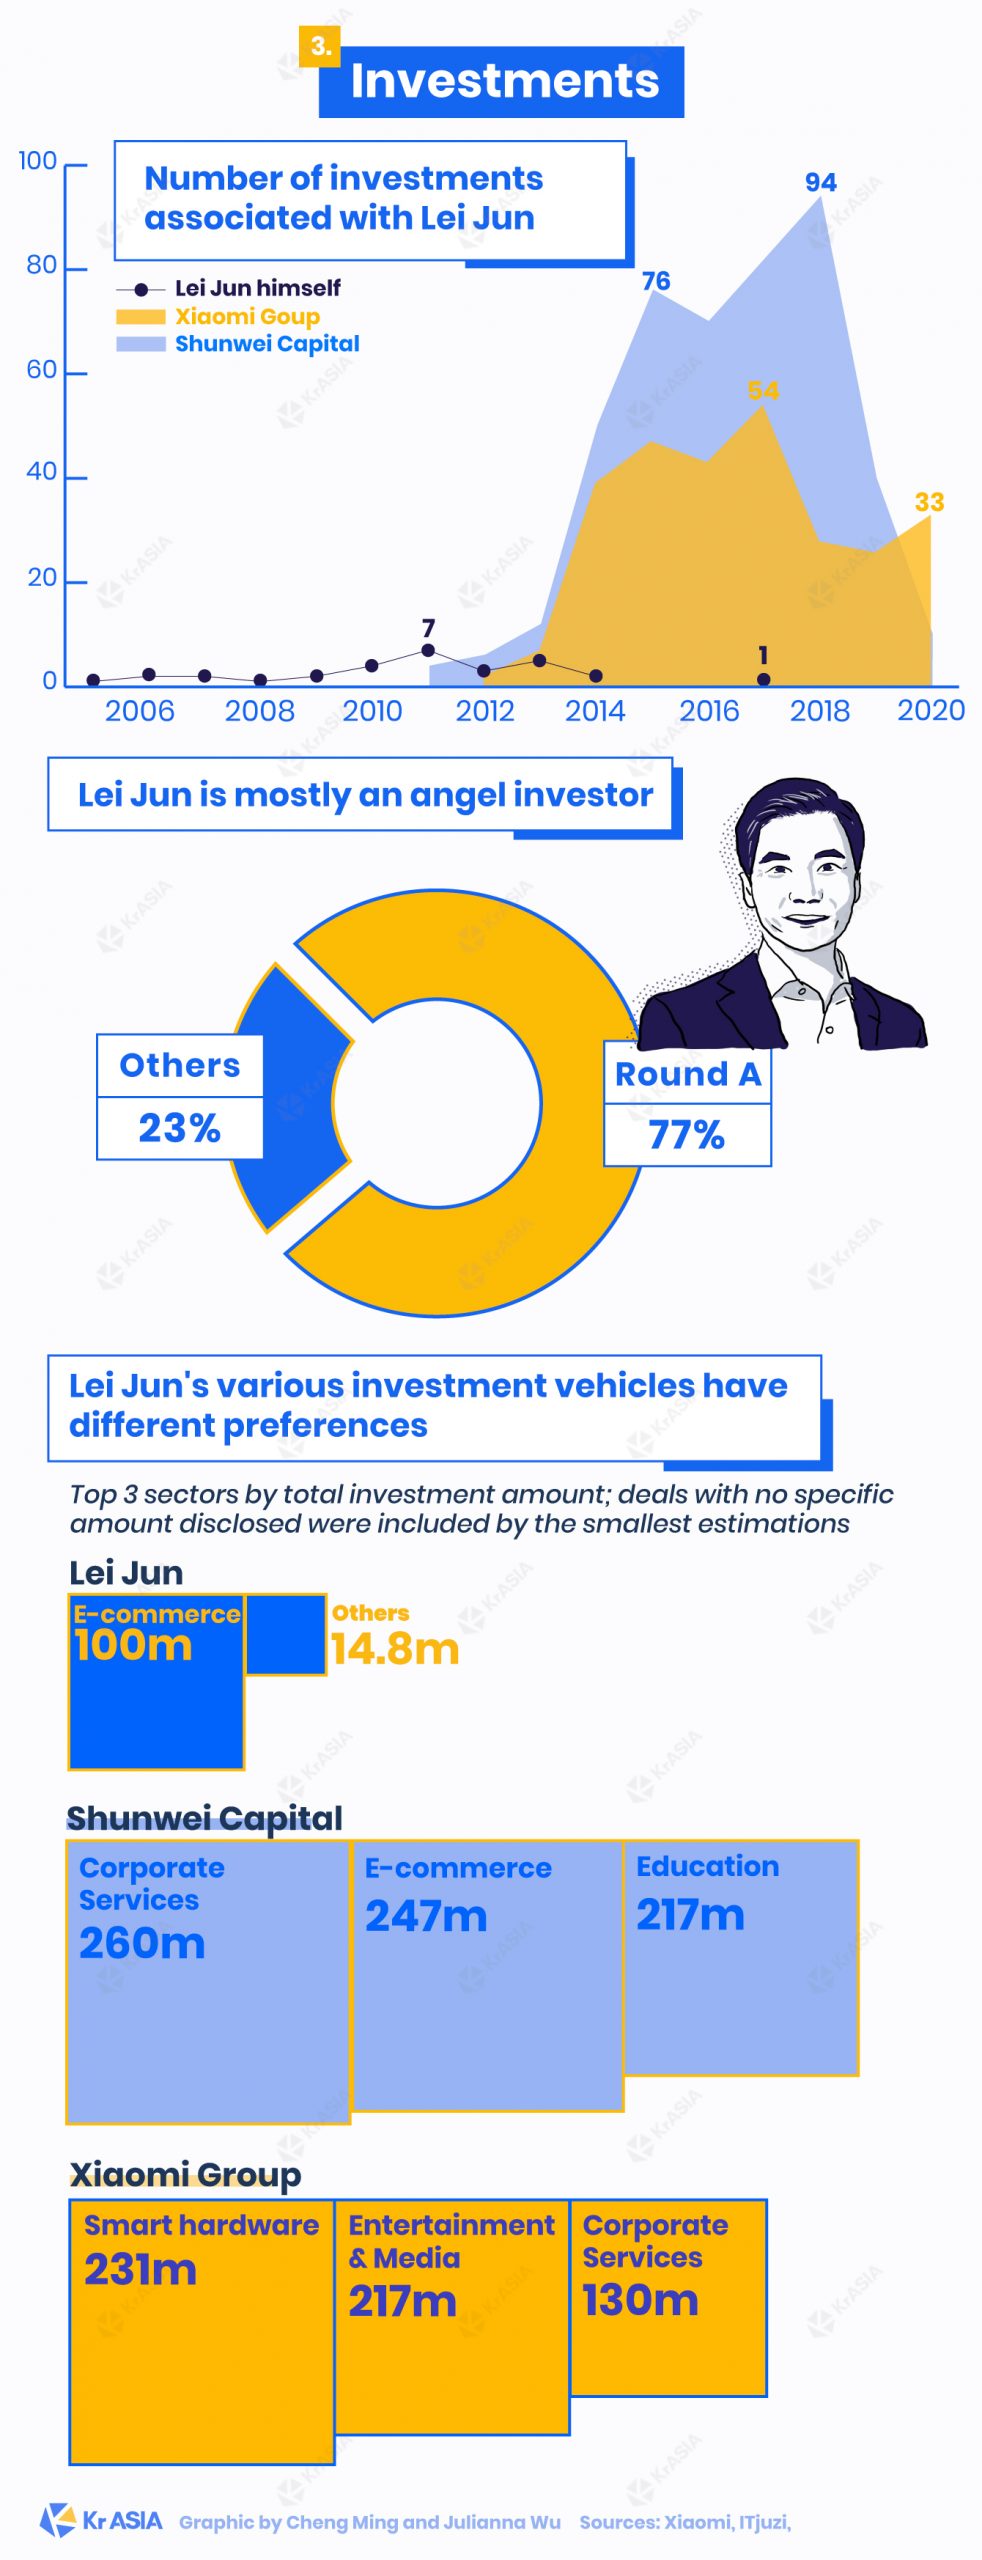 Xiaomi CEO Lei Jun's investments